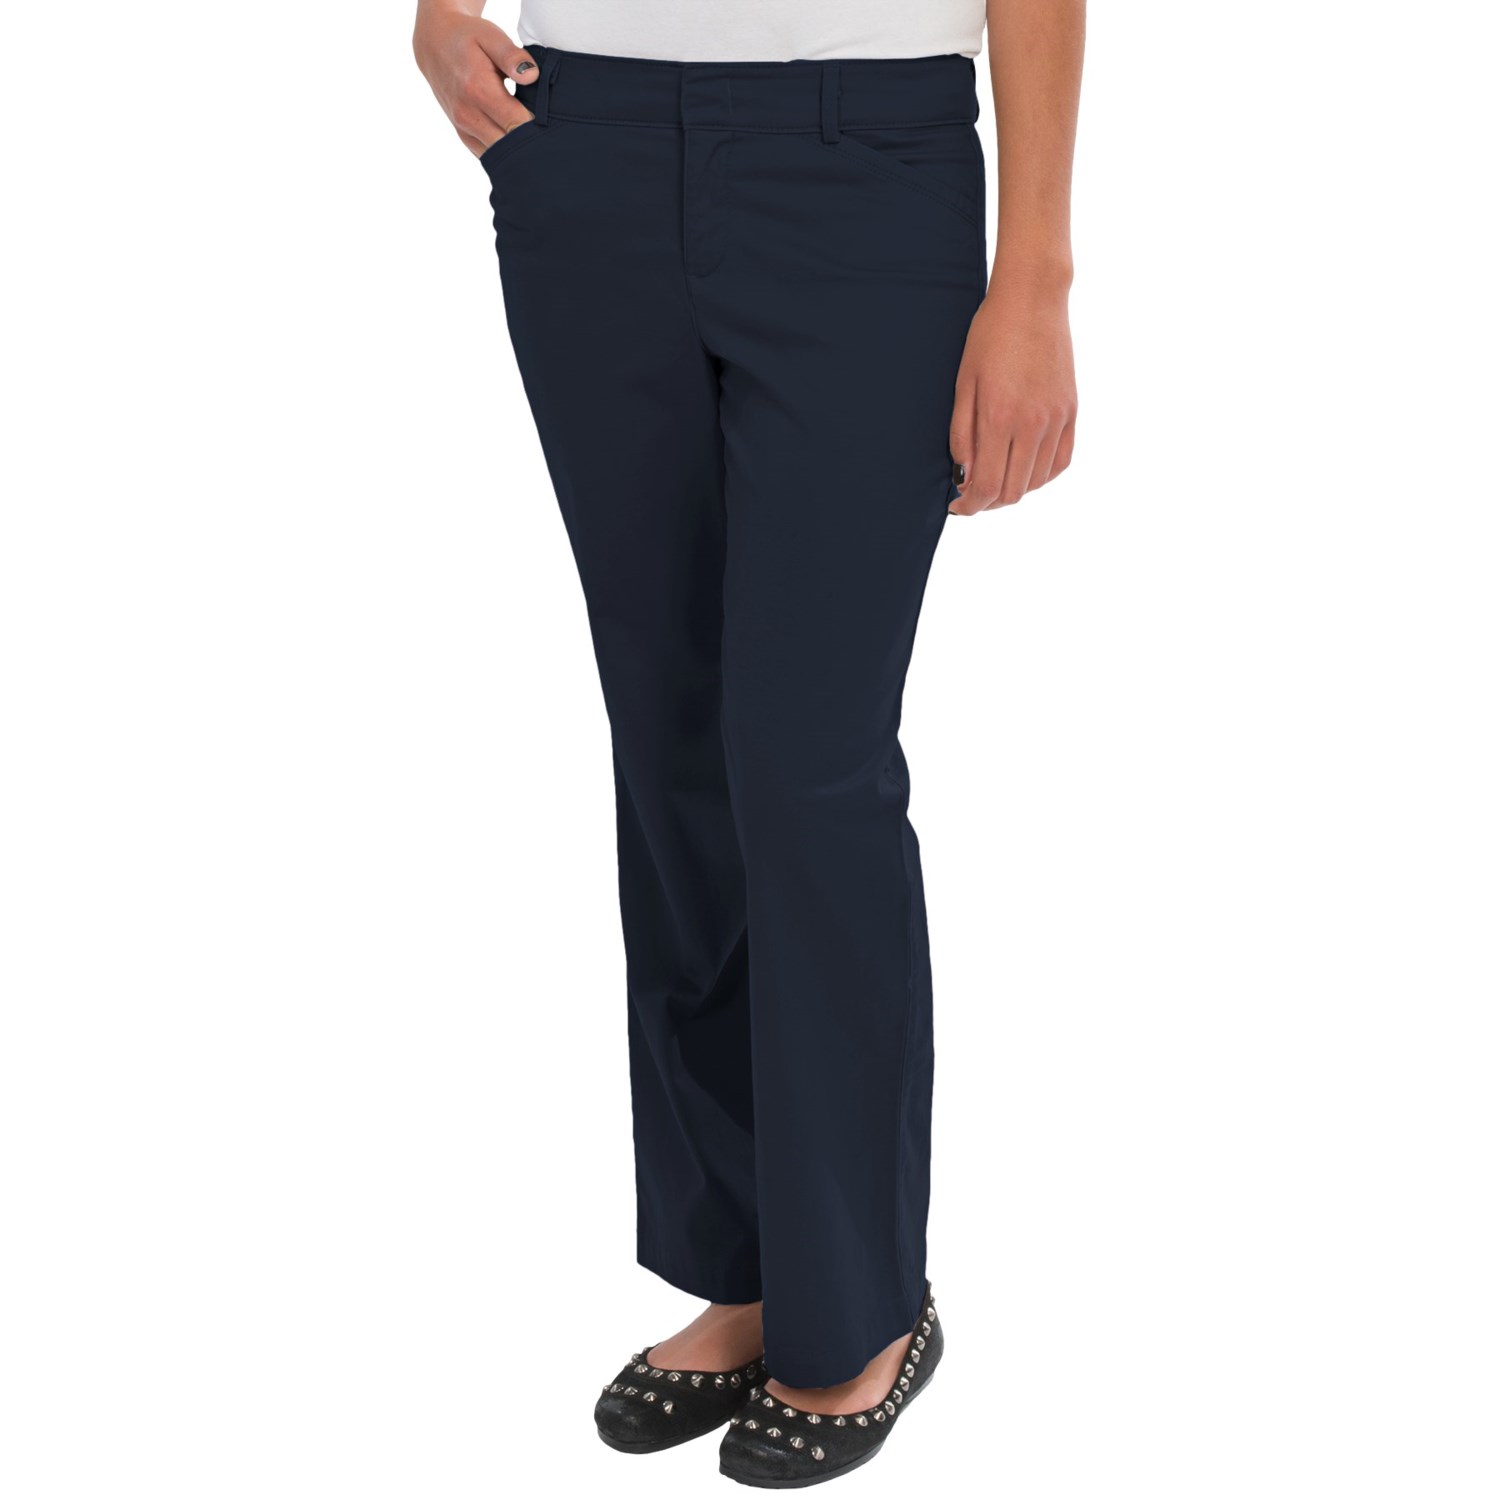 Continental Khaki Pants (For Women) - Save 79%